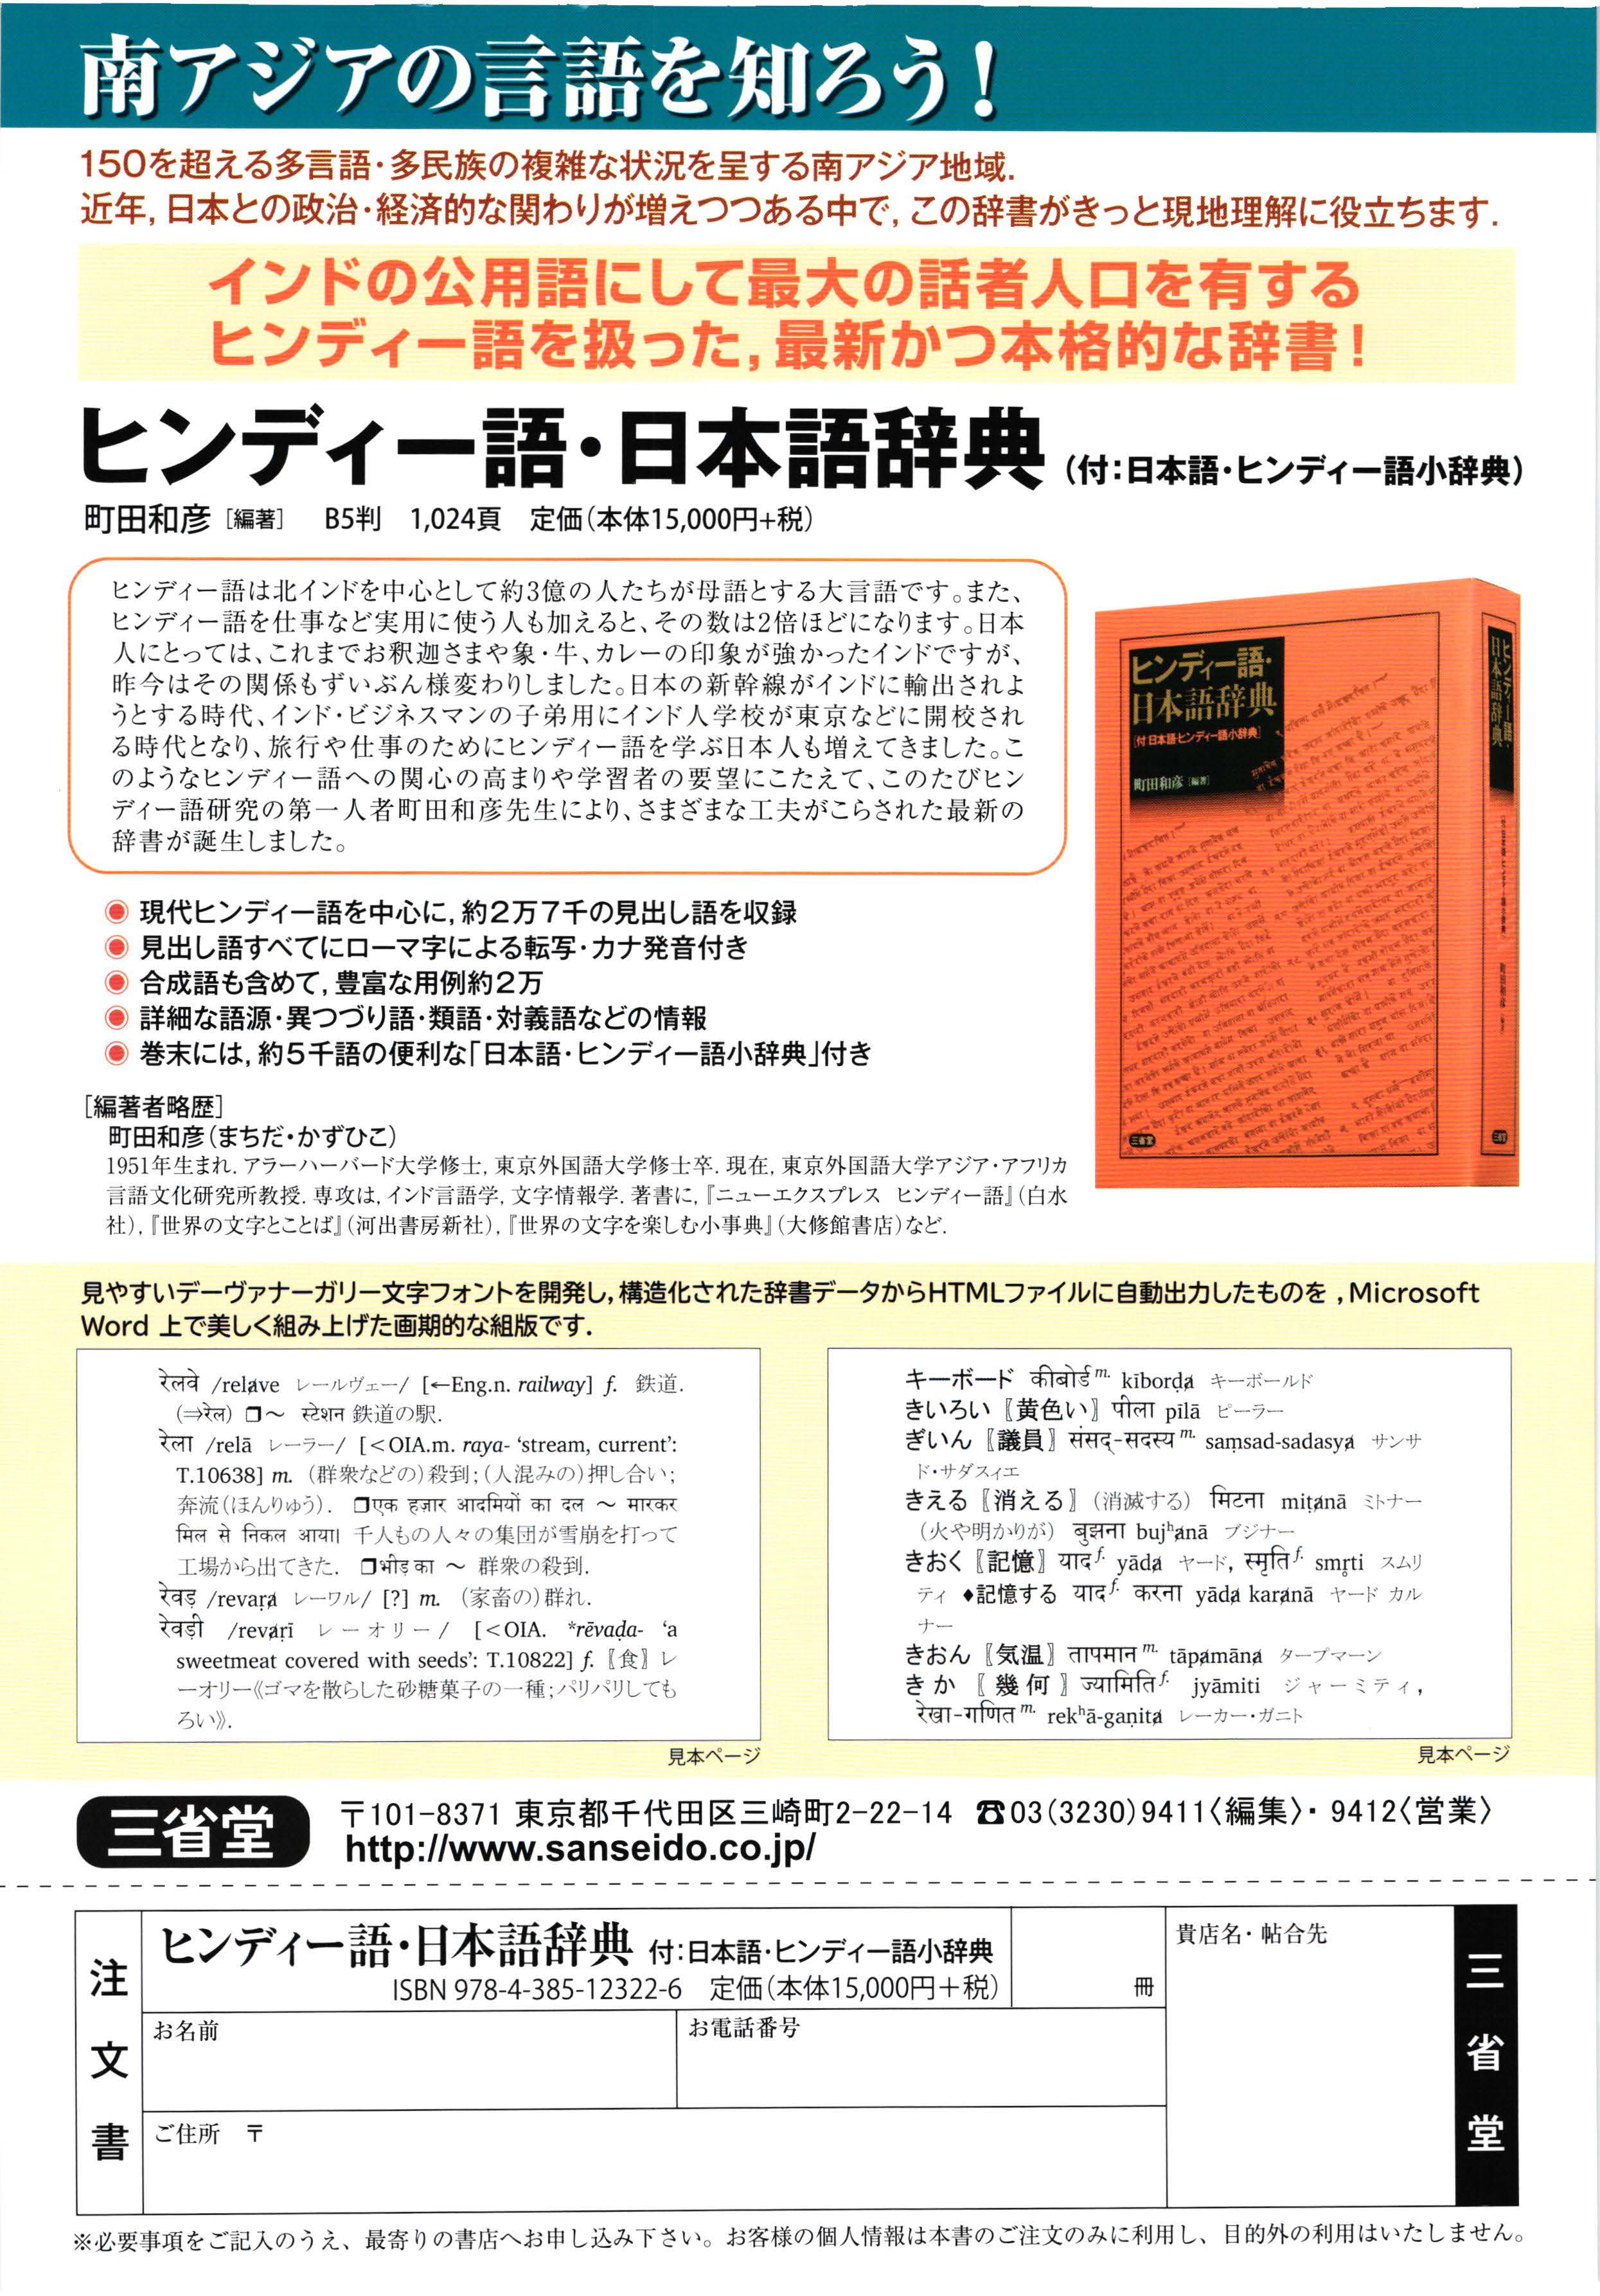 Sanseido Hindi Japanese Dictionary